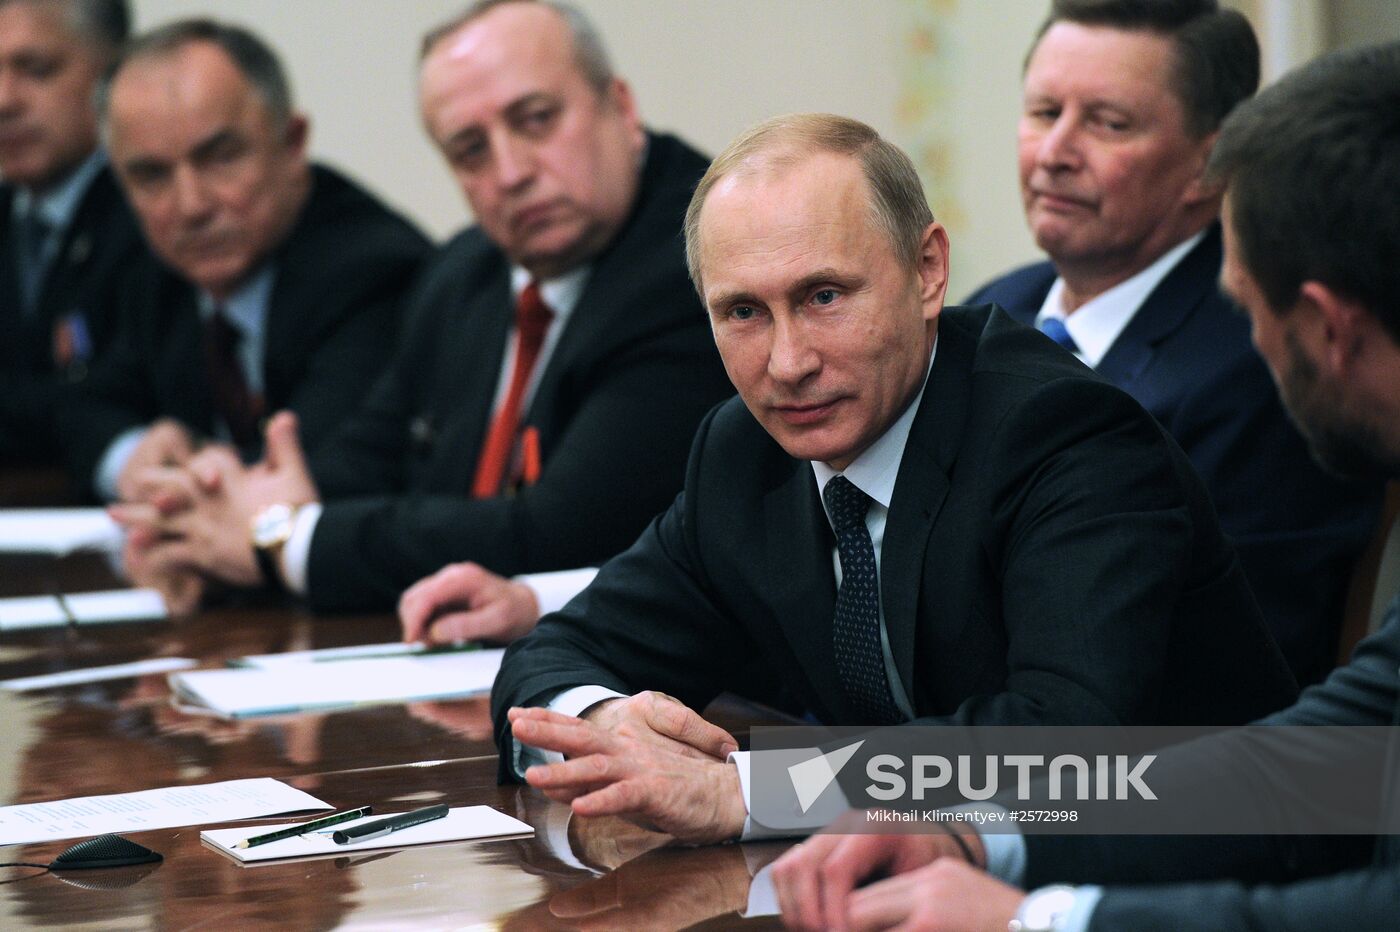 President Vladimir Putin's meeting with representatives of veterans' organizations